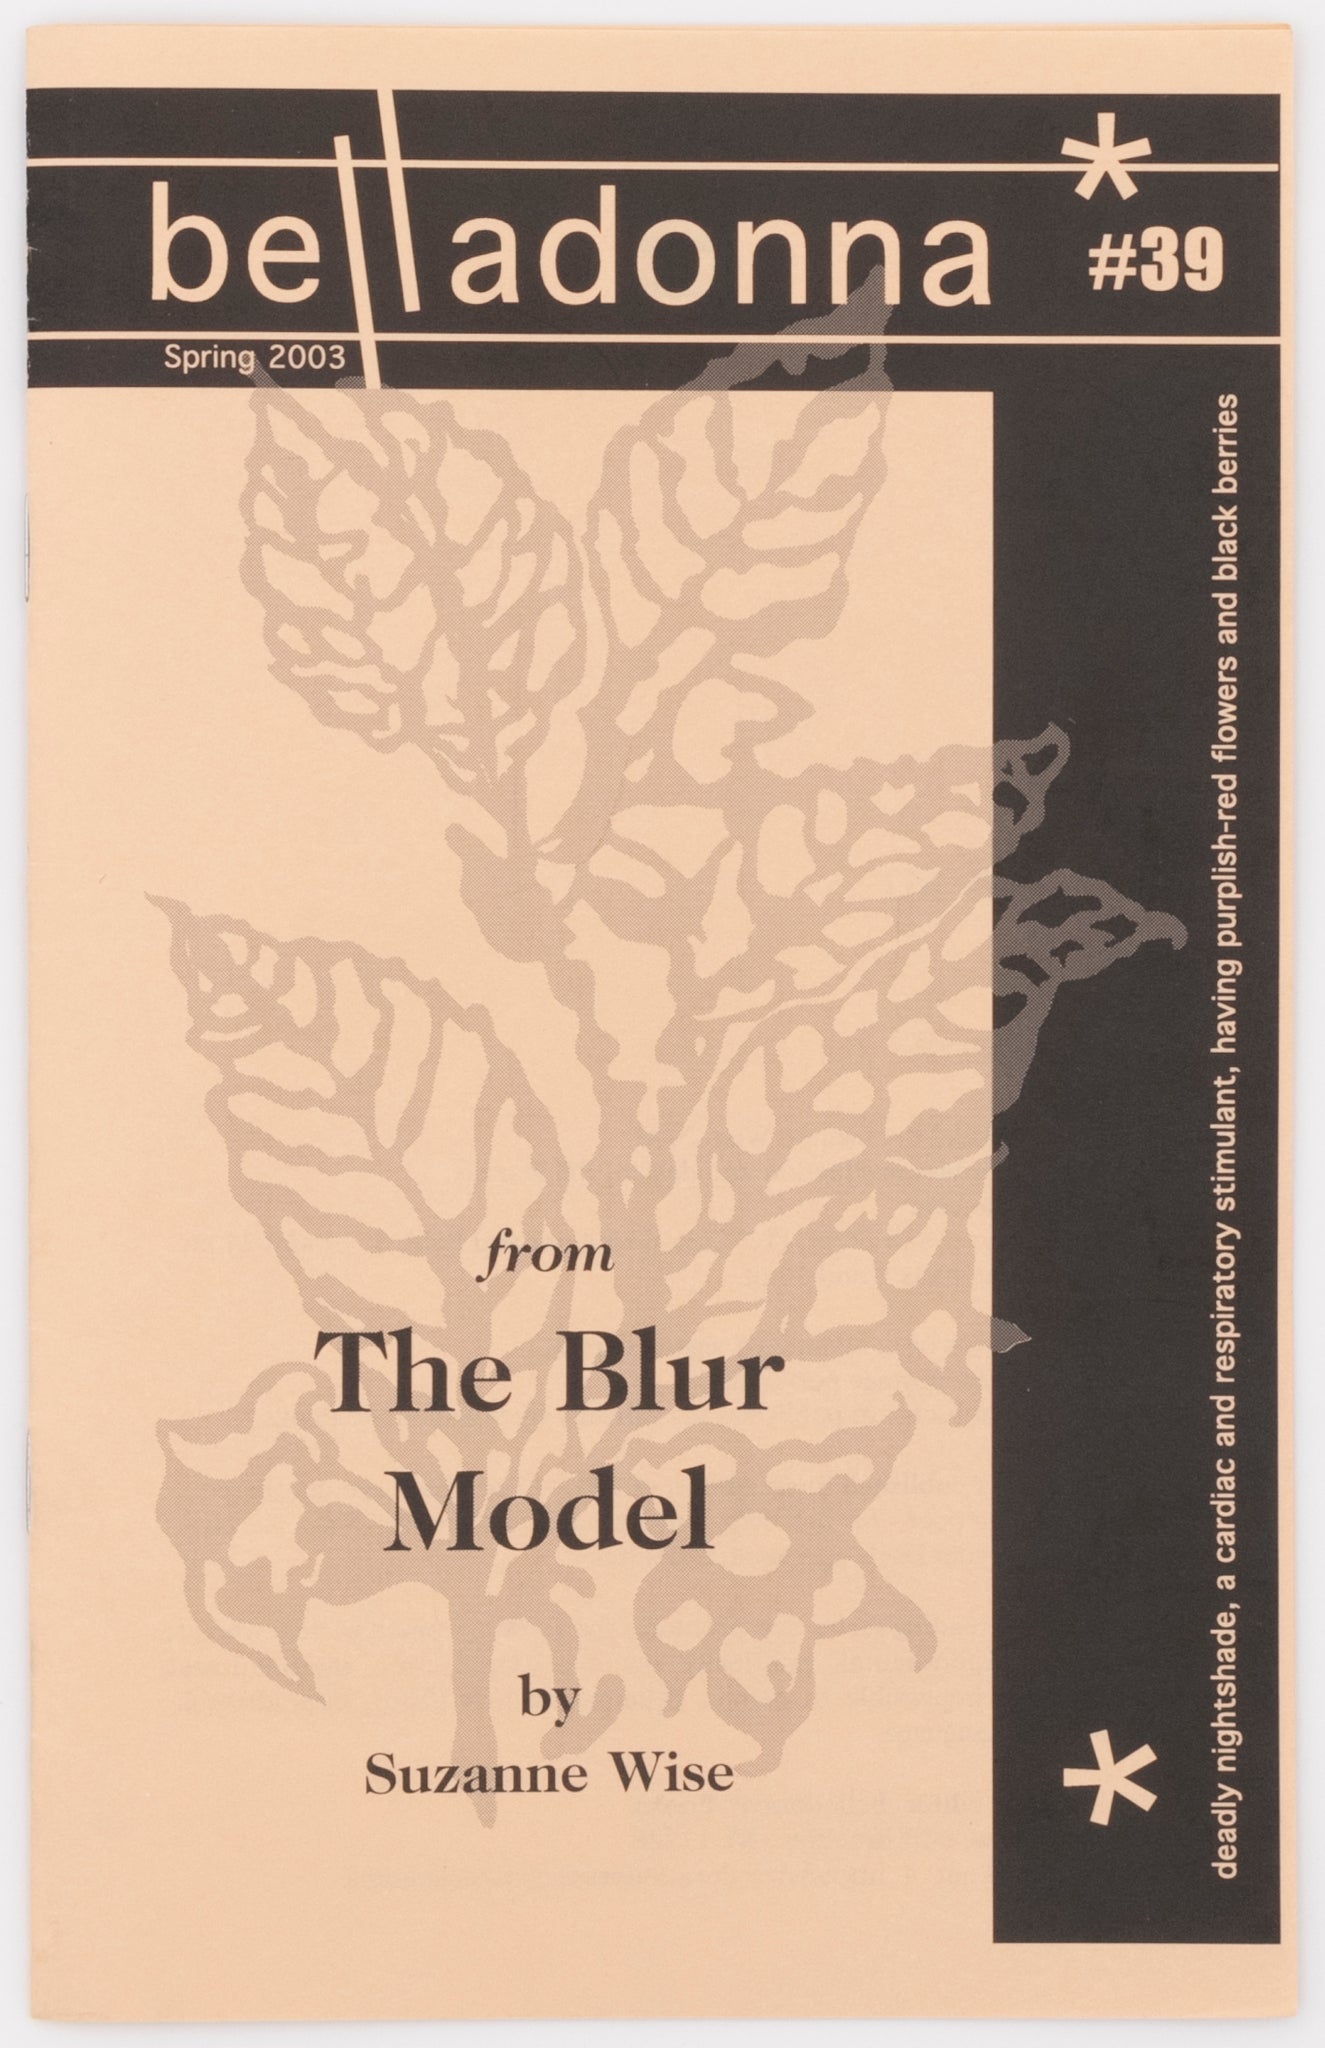 from The Blur Model (Belladonna* #39)